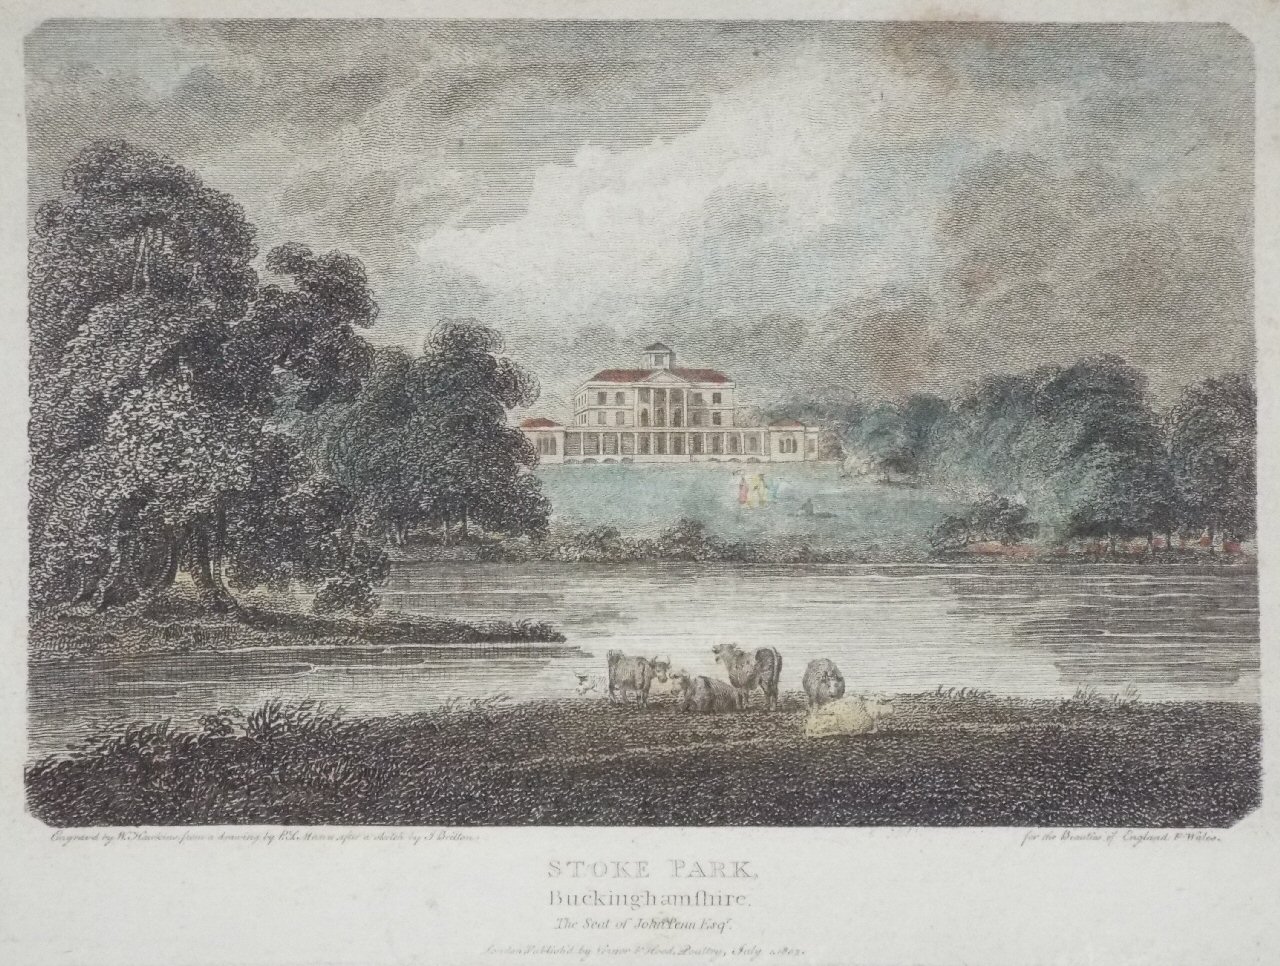 Print - Stoke Park, Buckinghamshire, The Seat of John Penn Esqr. - Hawkins